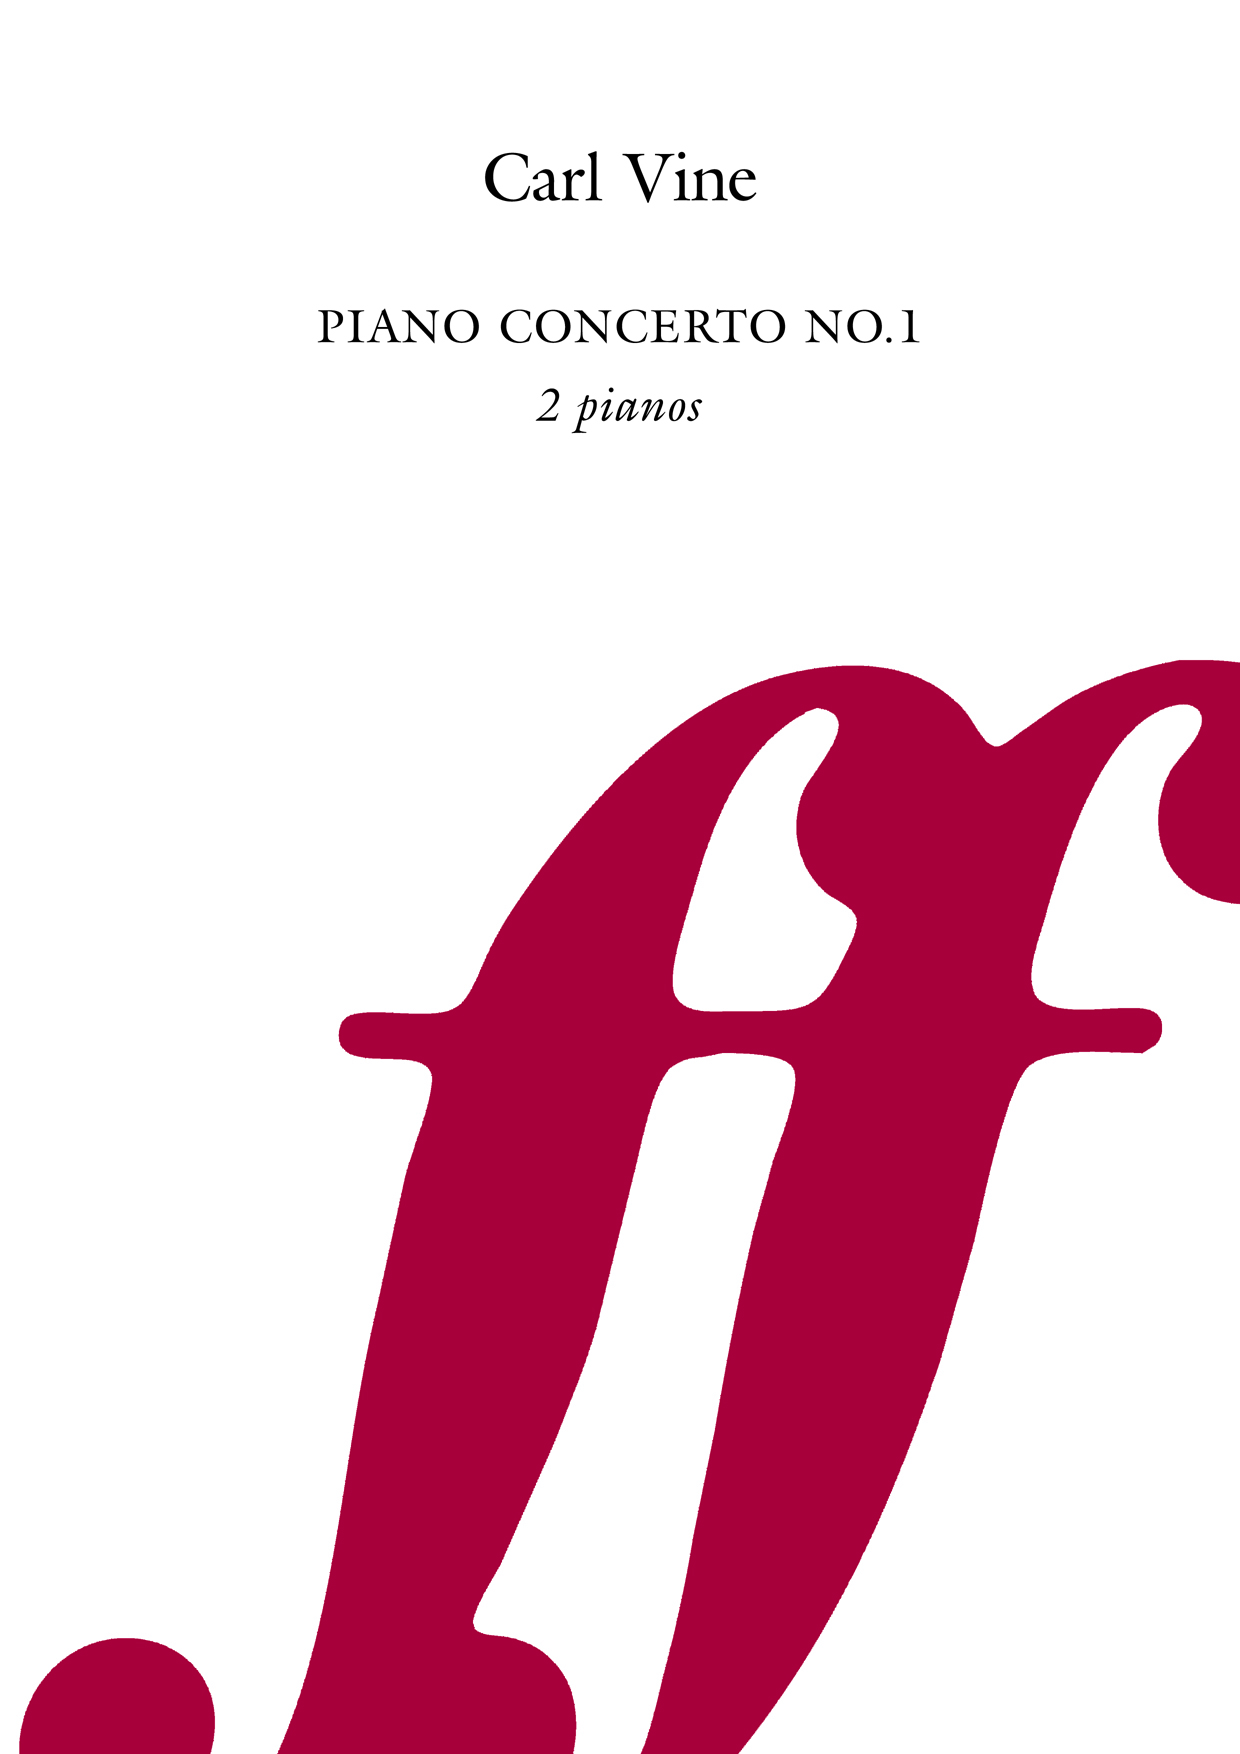 Piano Concerto No.1 (VINE CARL)